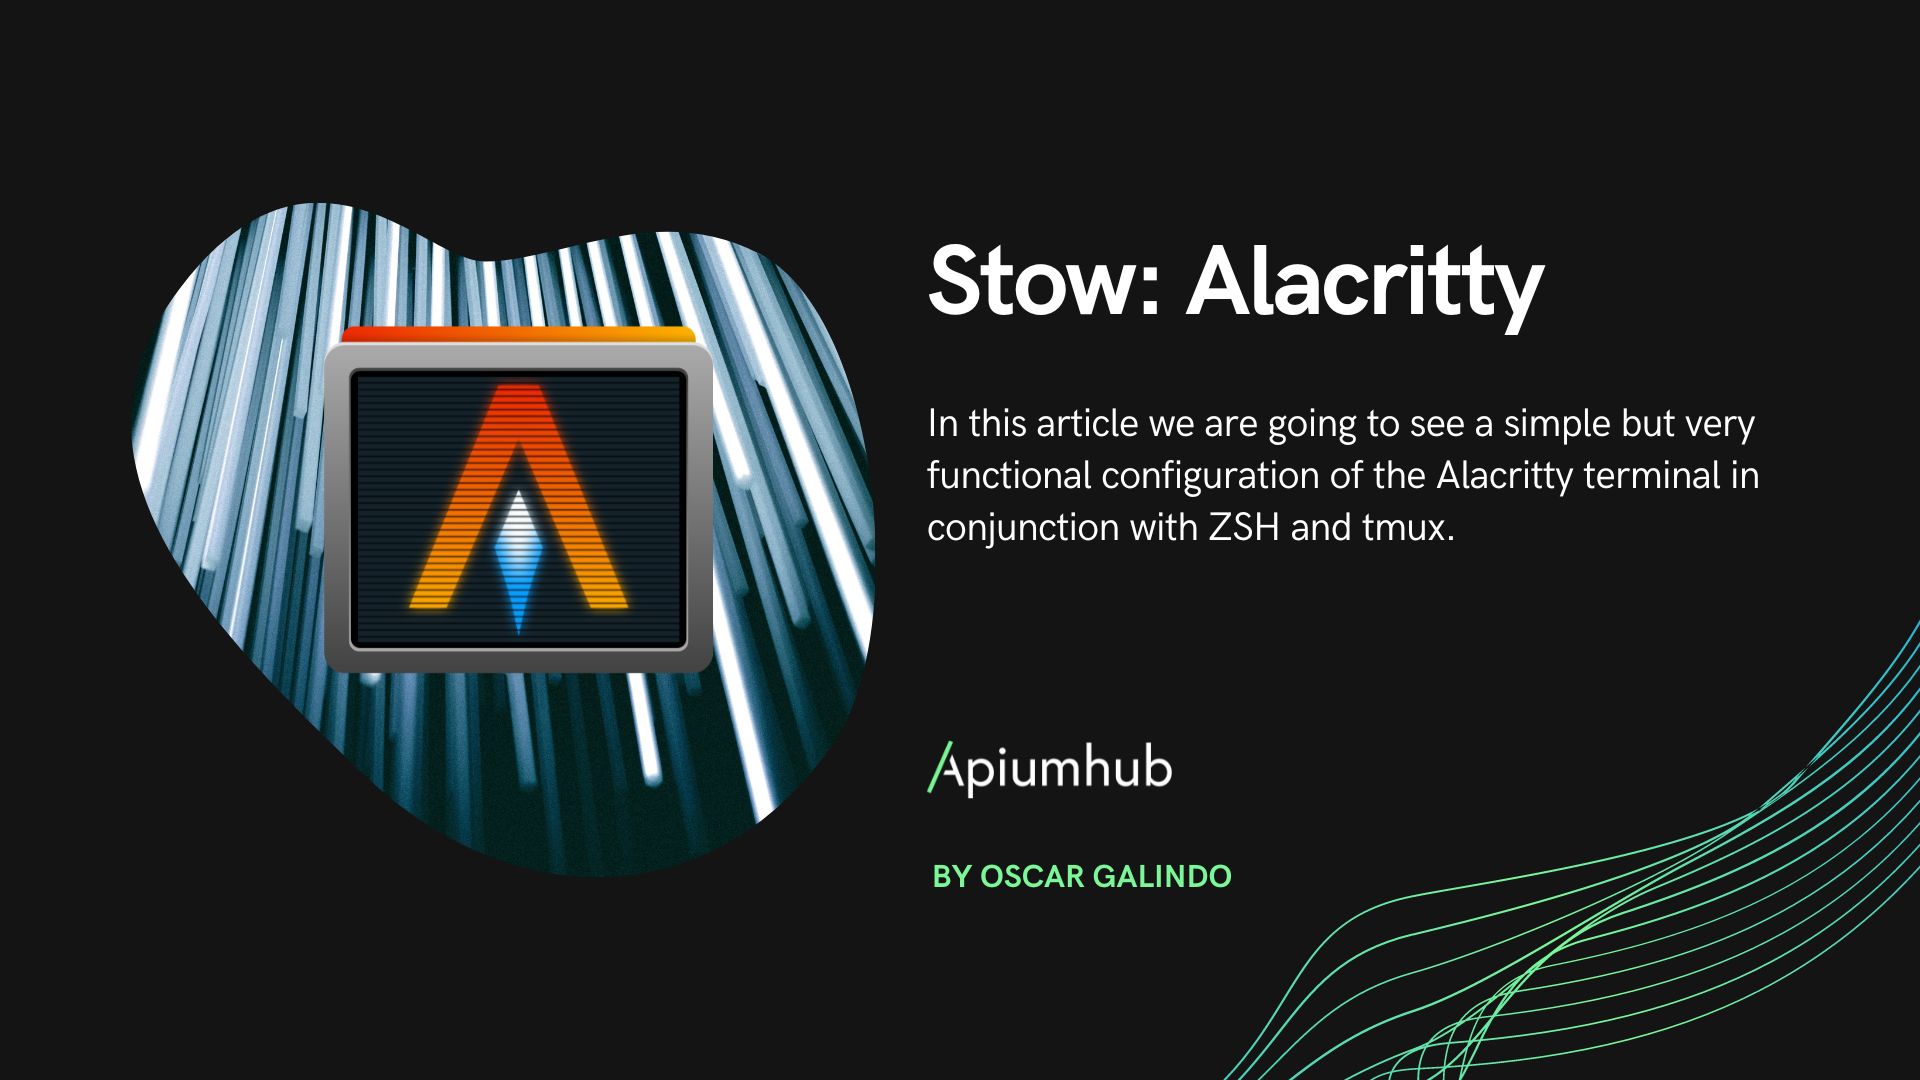 Stow: Alacritty